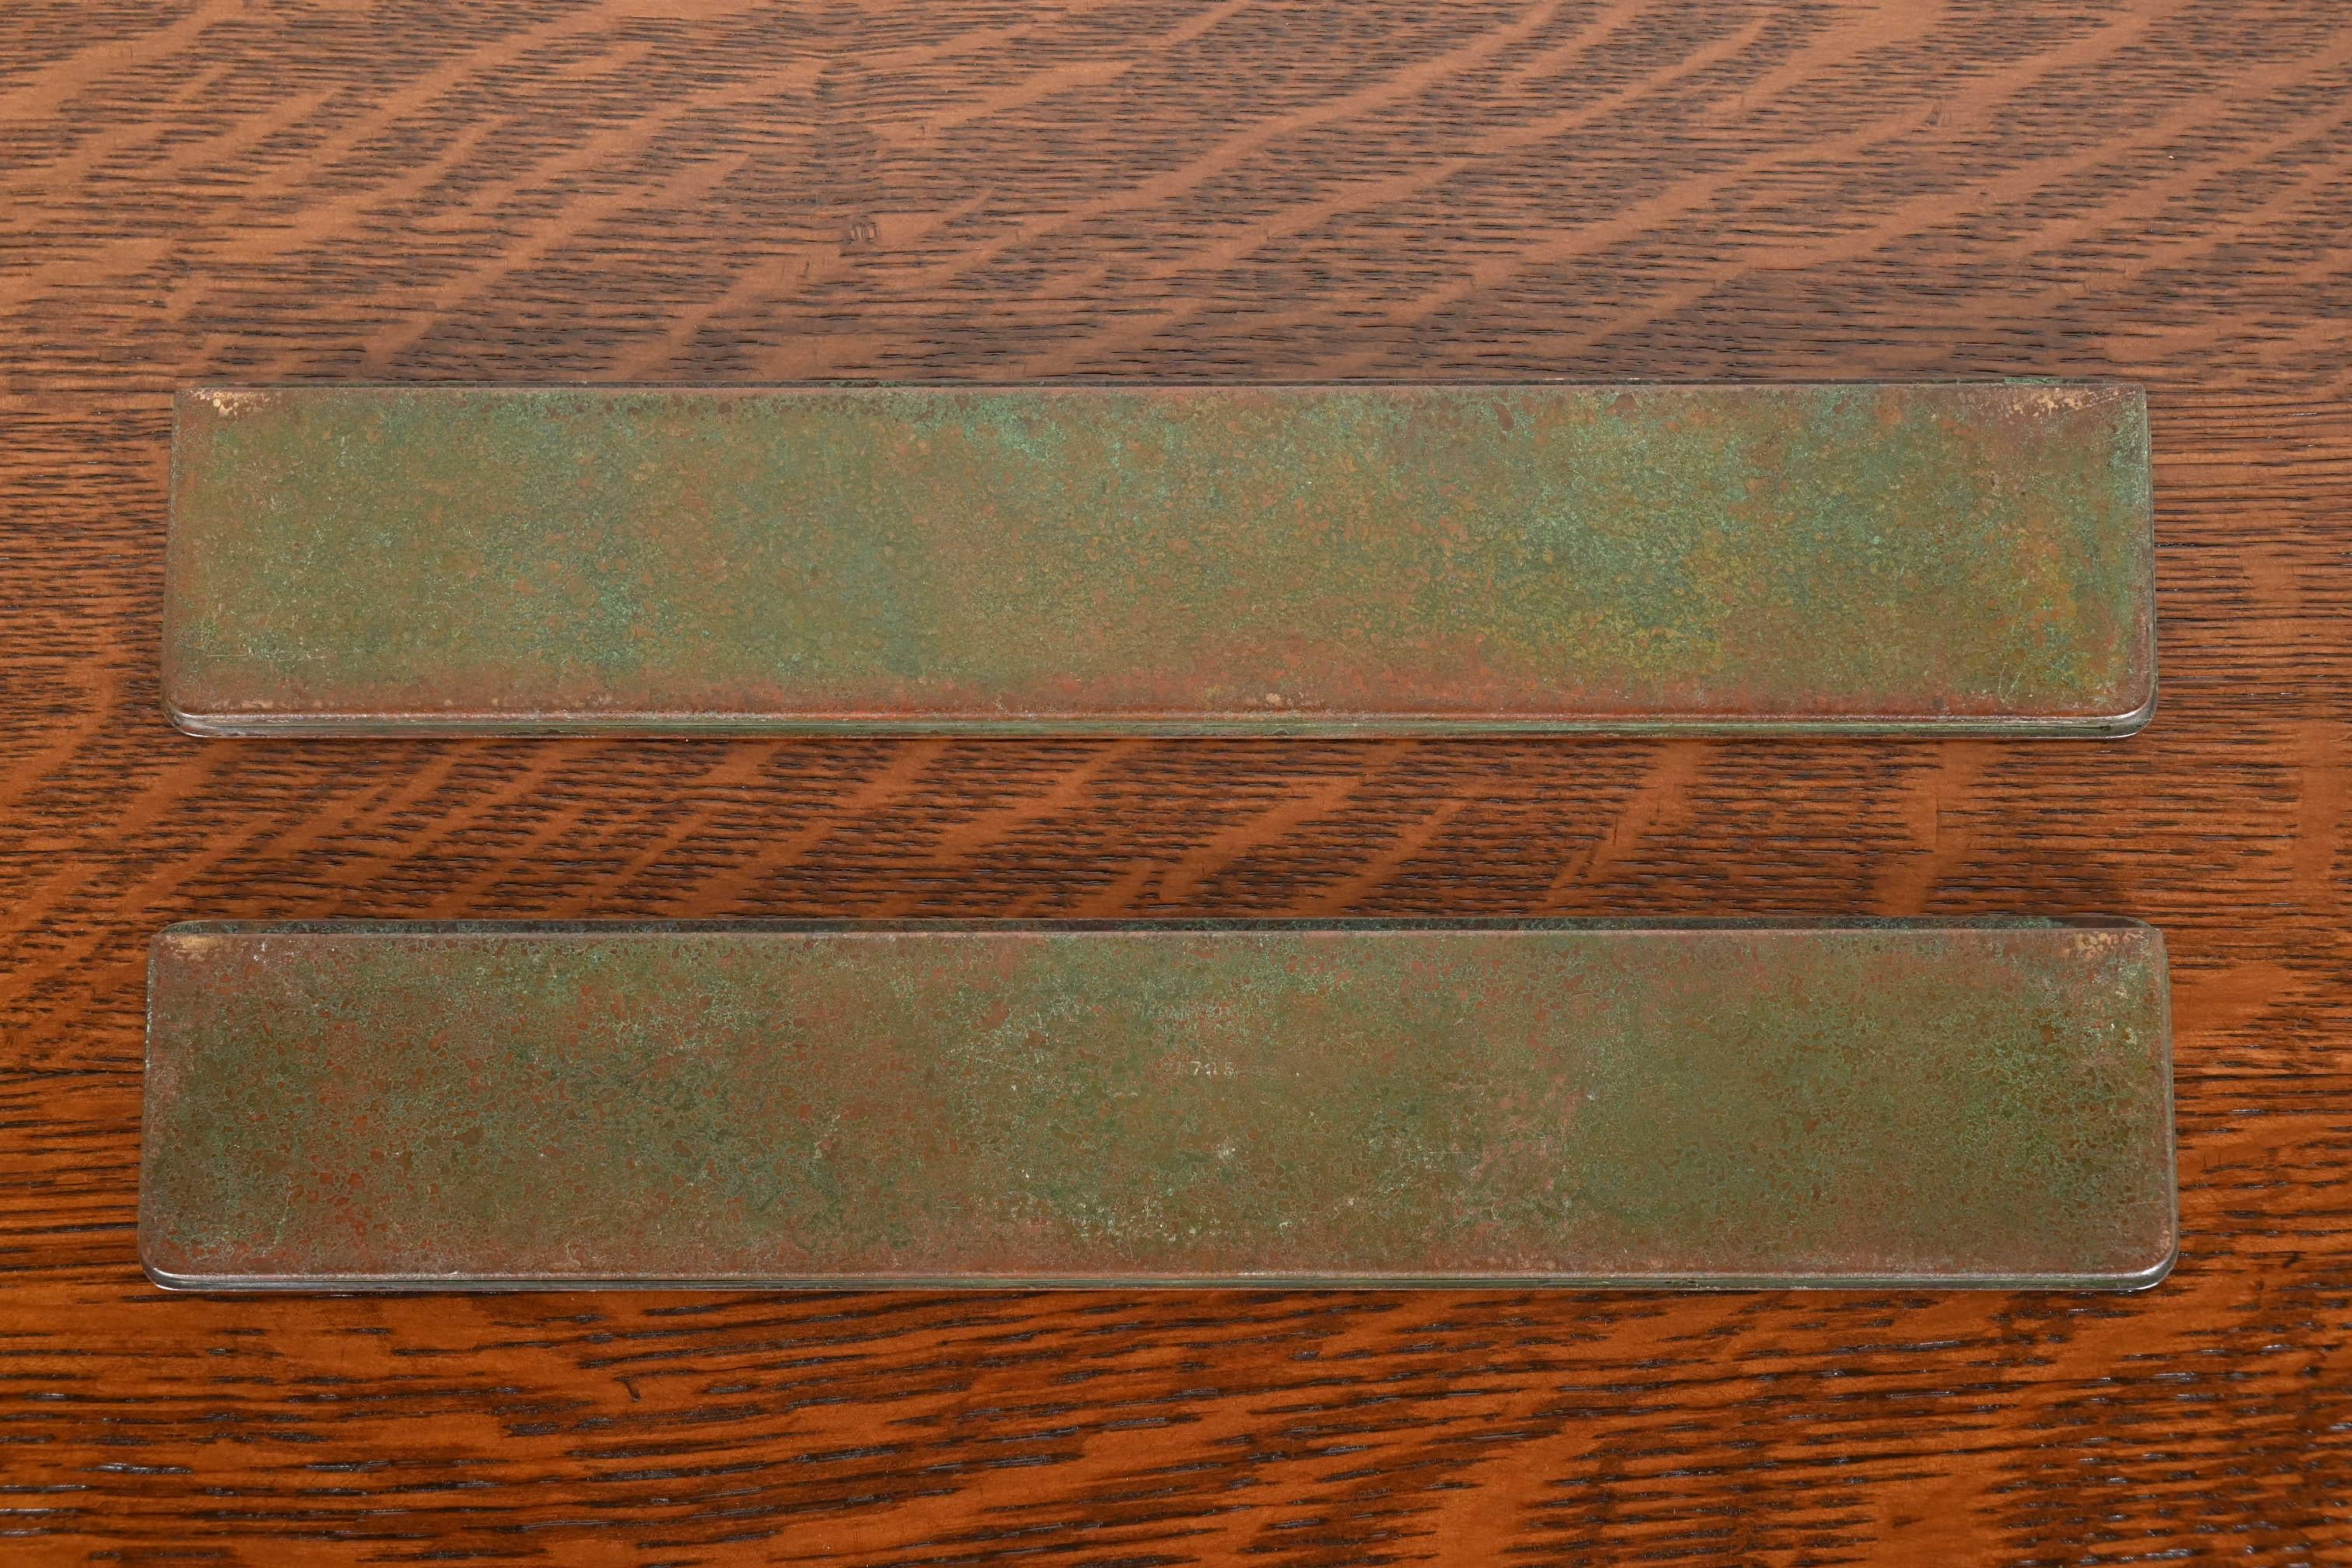 Tiffany Studios Graduate Pattern Bronze Blotter Ends With Leather Desk Blotter For Sale 4